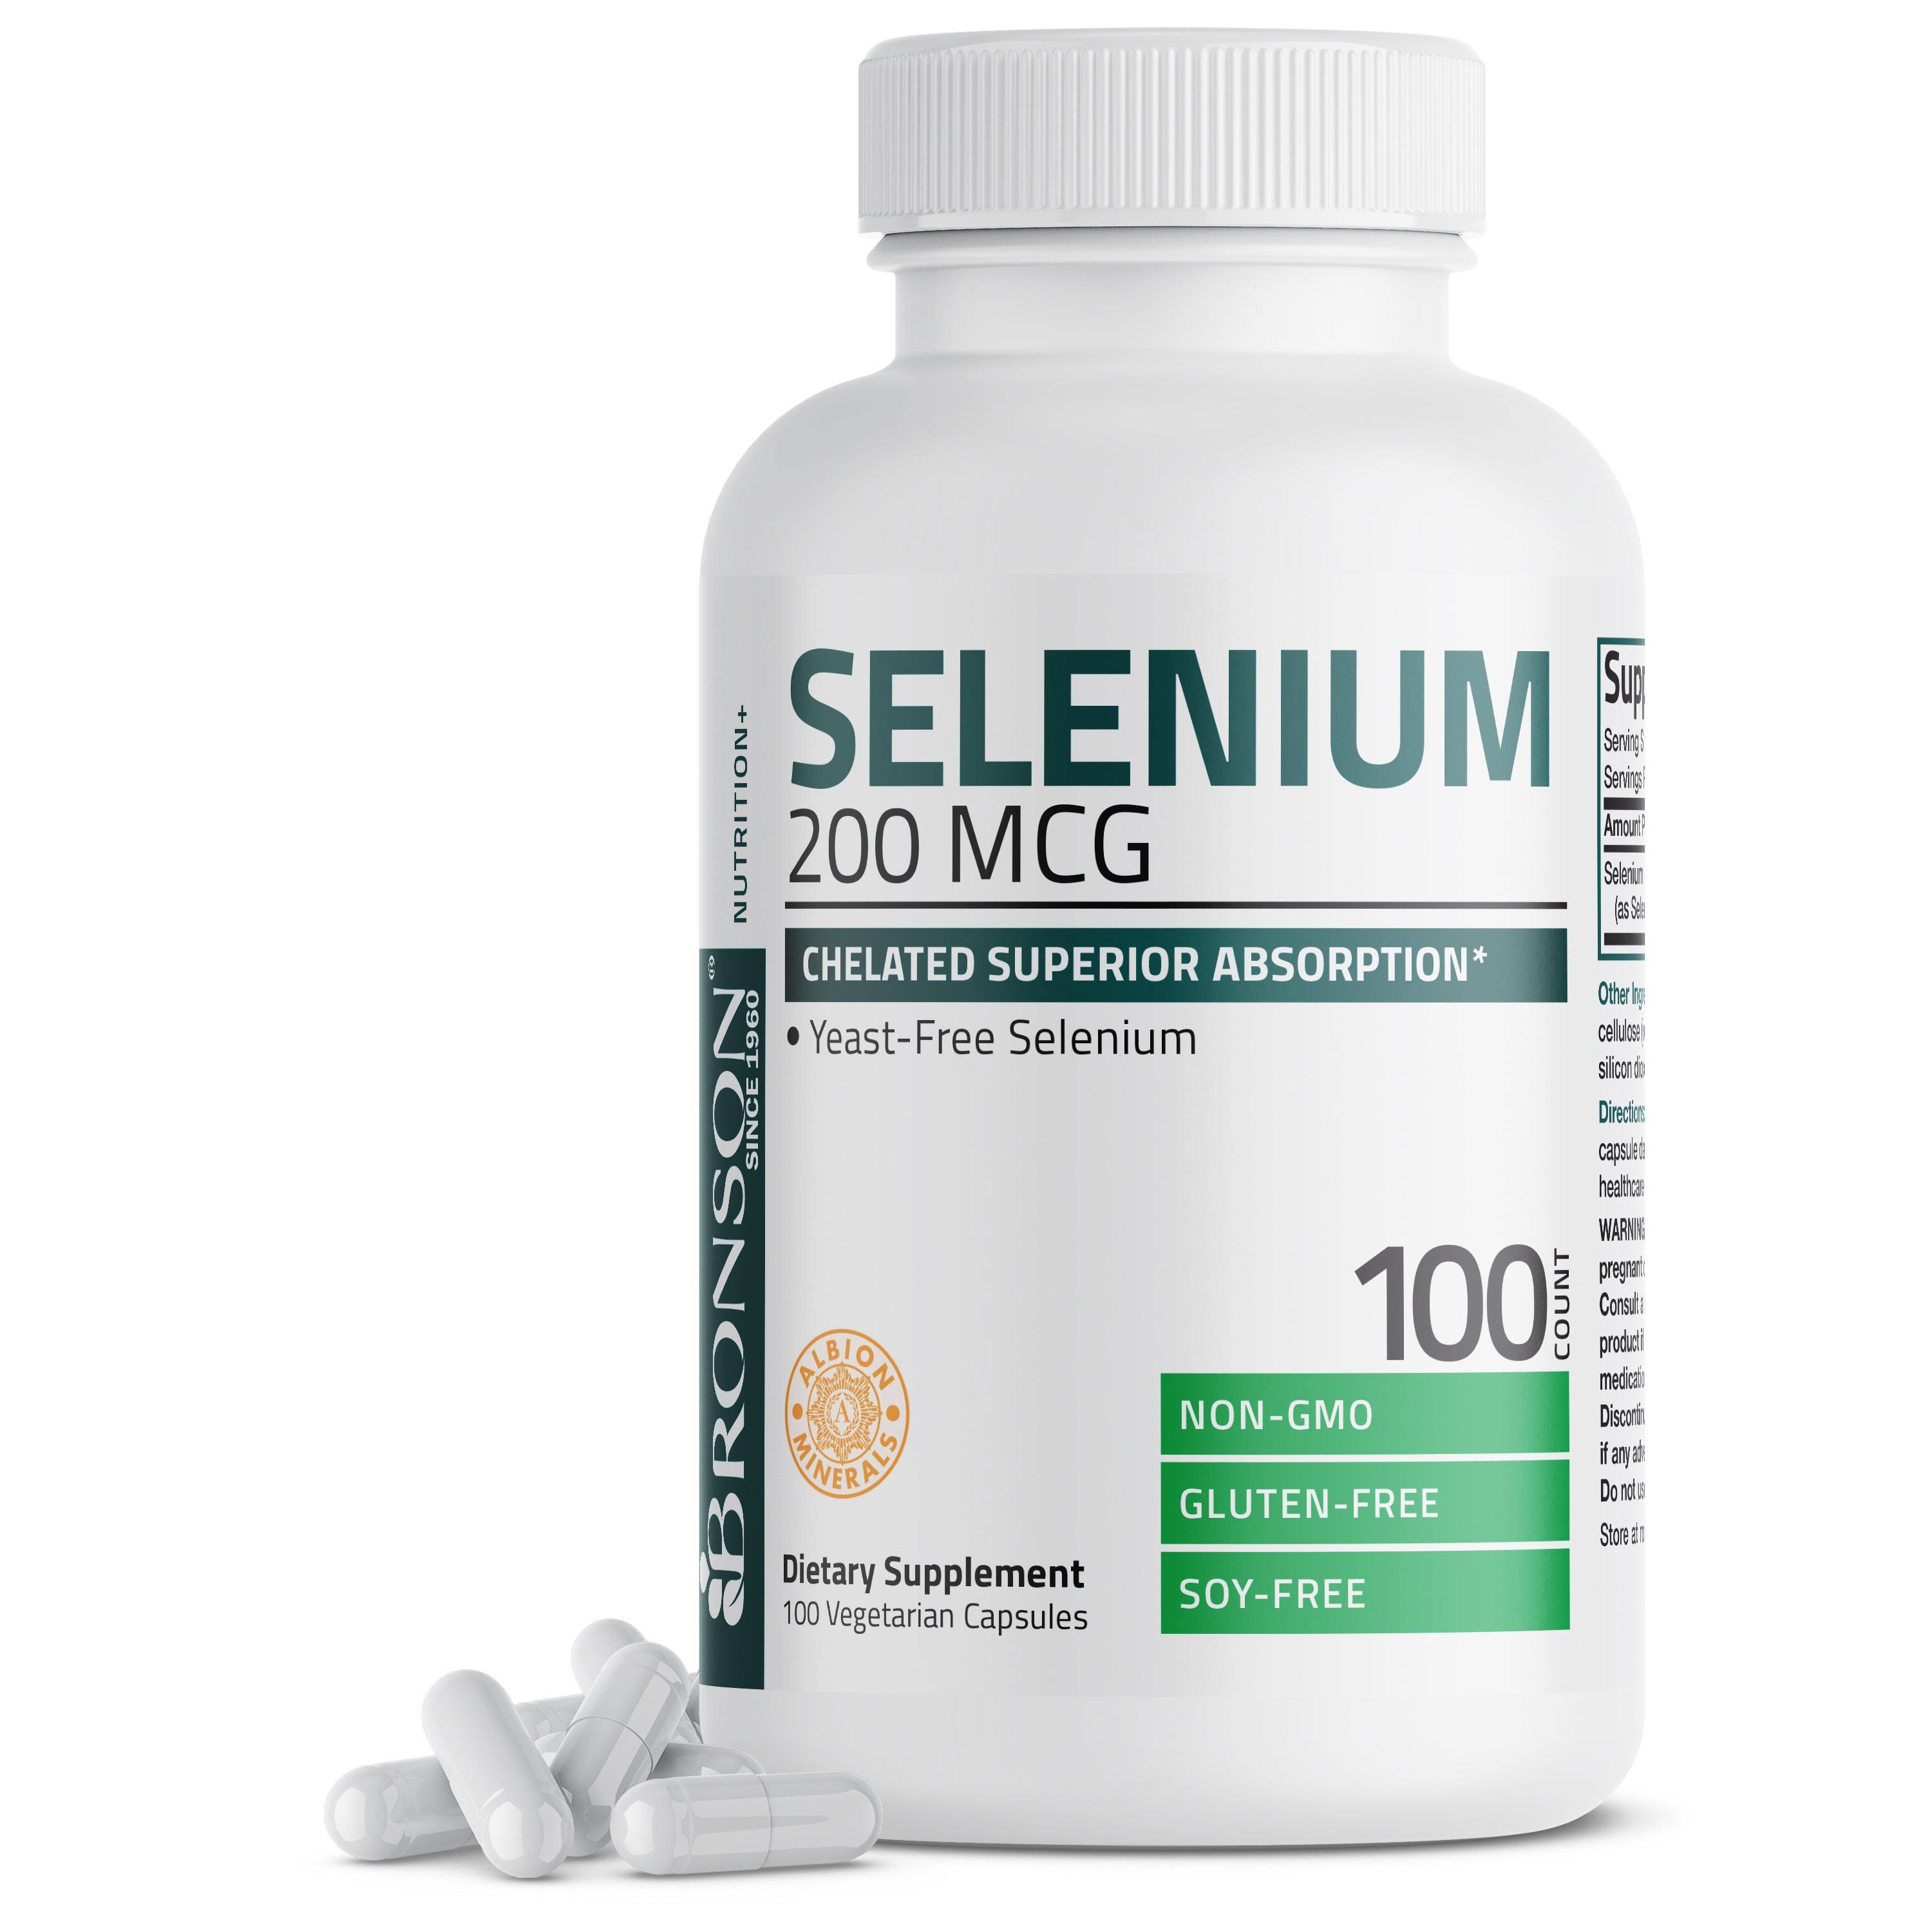 Selenium - 200 mcg view 7 of 6